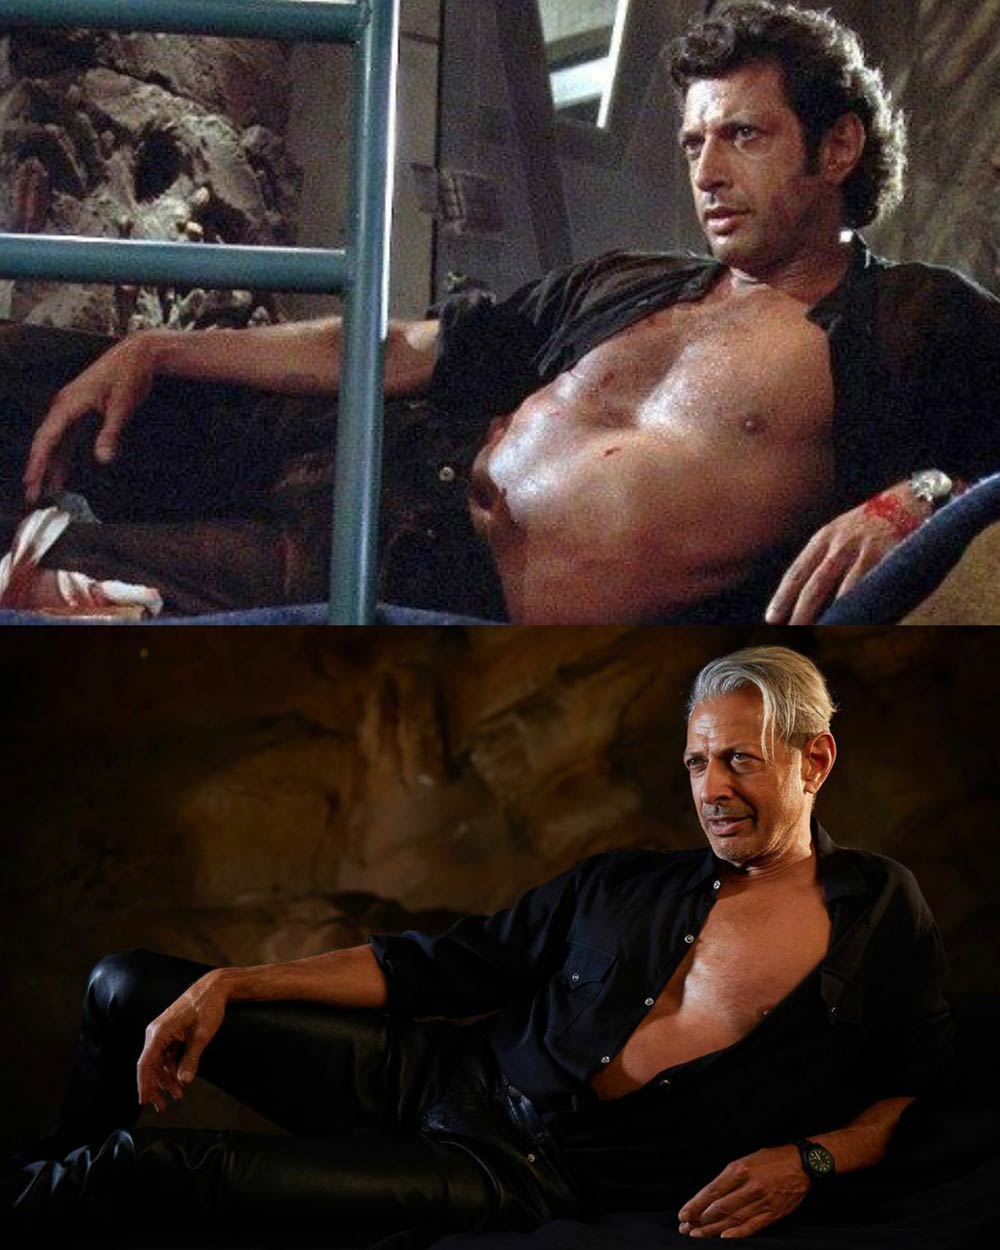 Jeff Goldblum recreated his iconic Jurassic Park pose